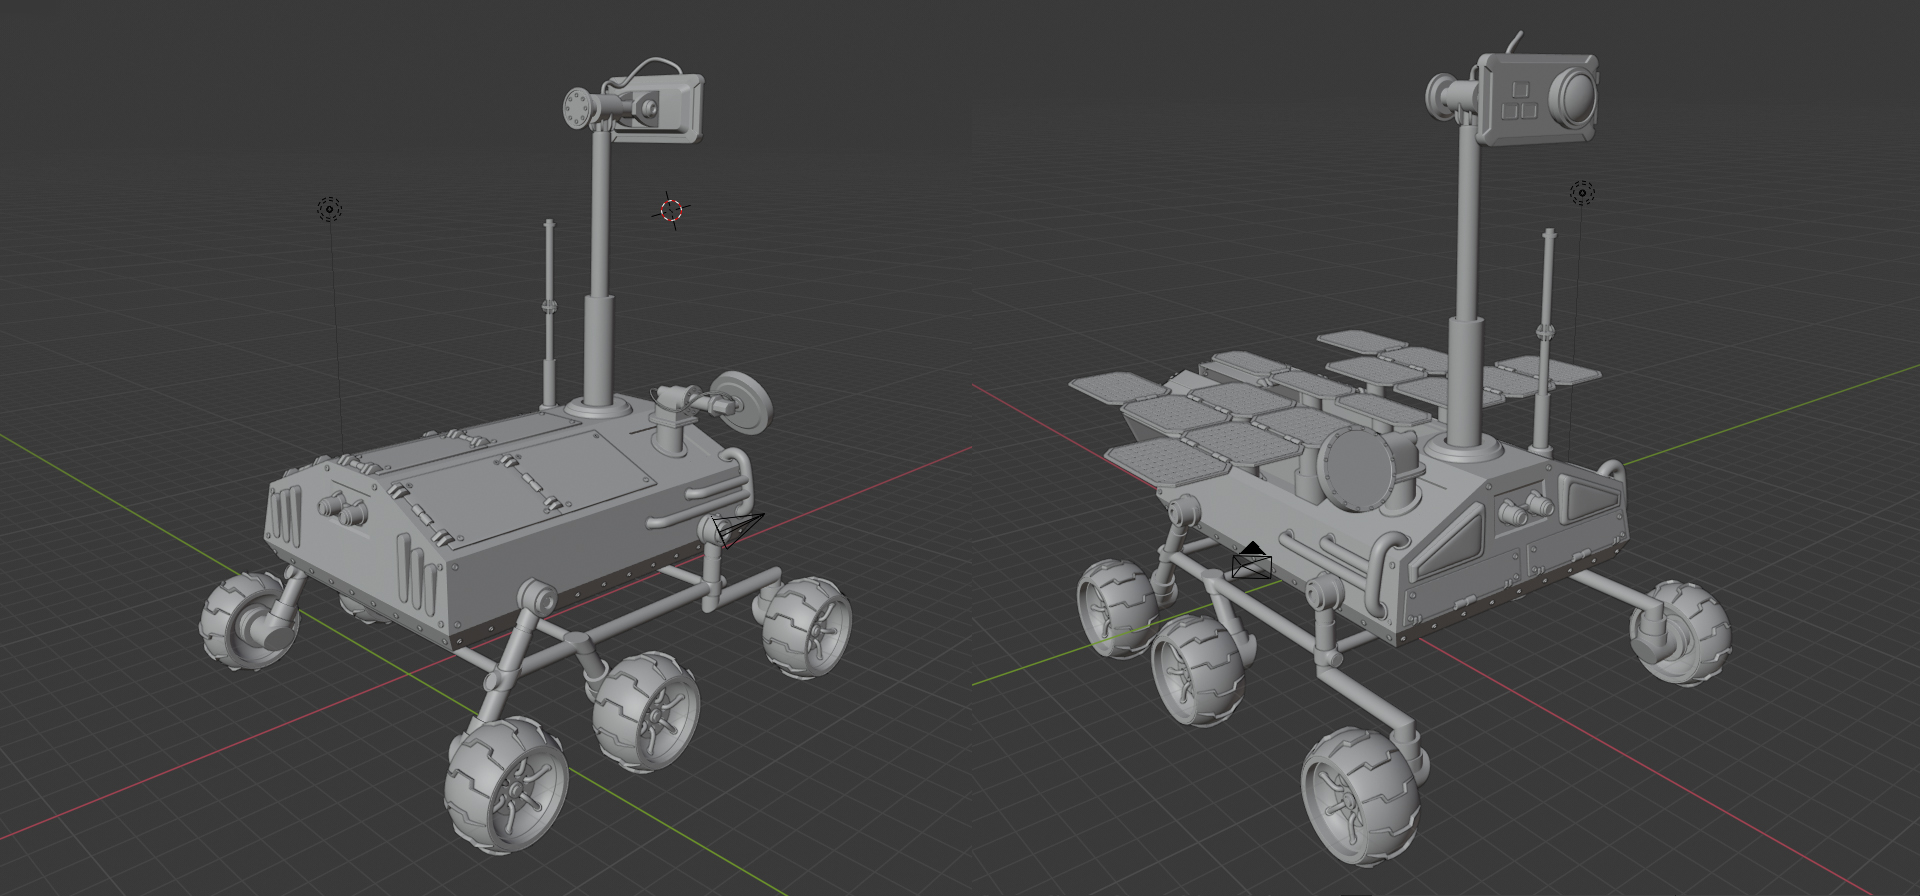 Space Rover 3D Art Challenge - Pranav V. P.